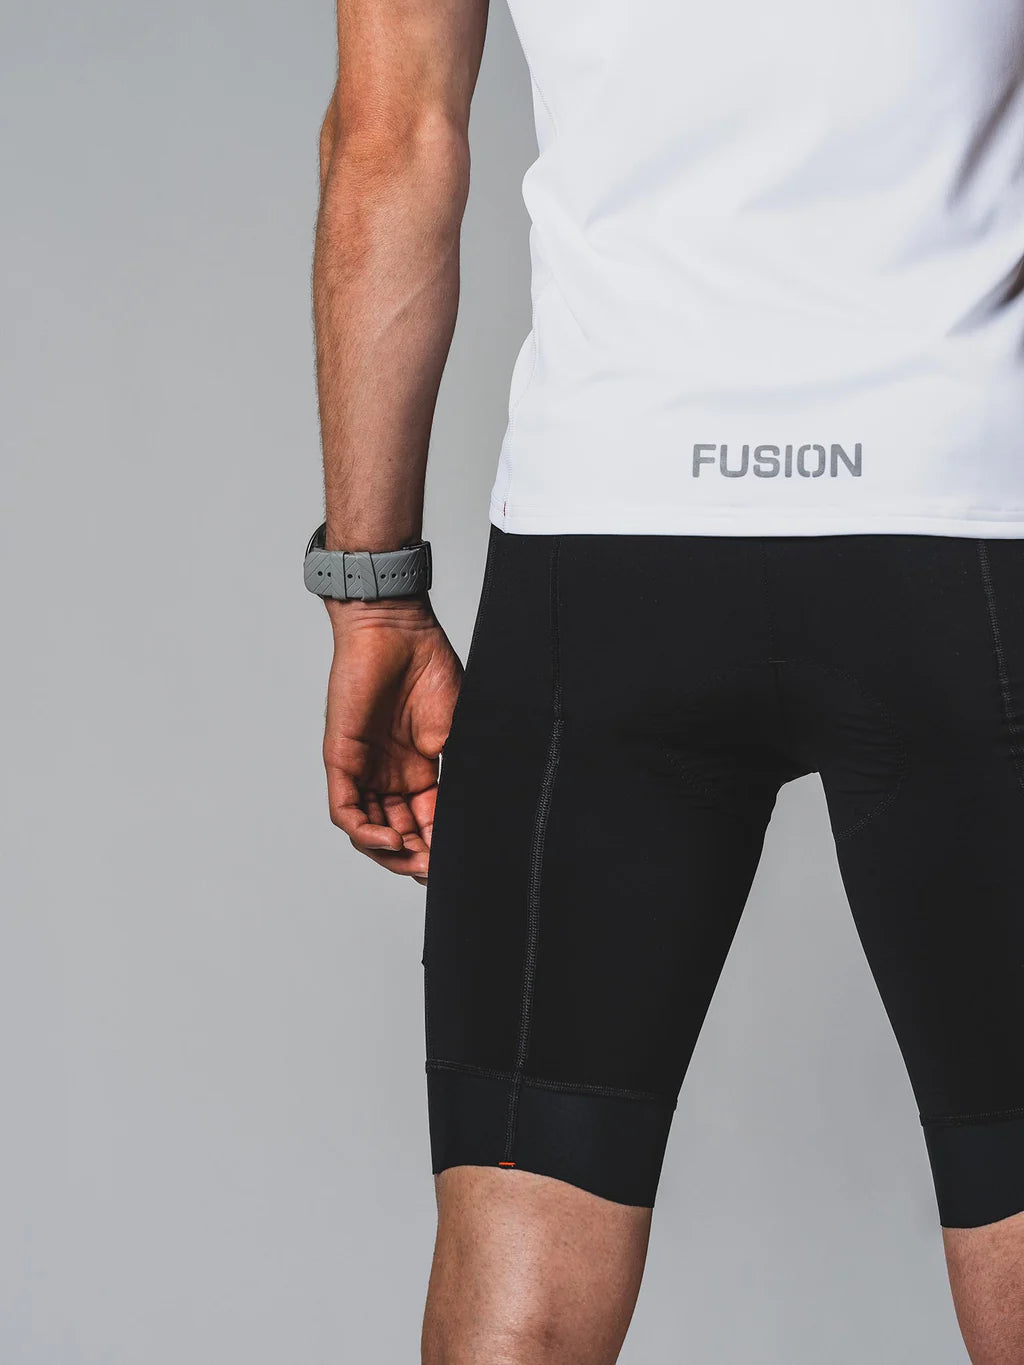 Fusion Tempo Tri Shorts Rear Leg Bands